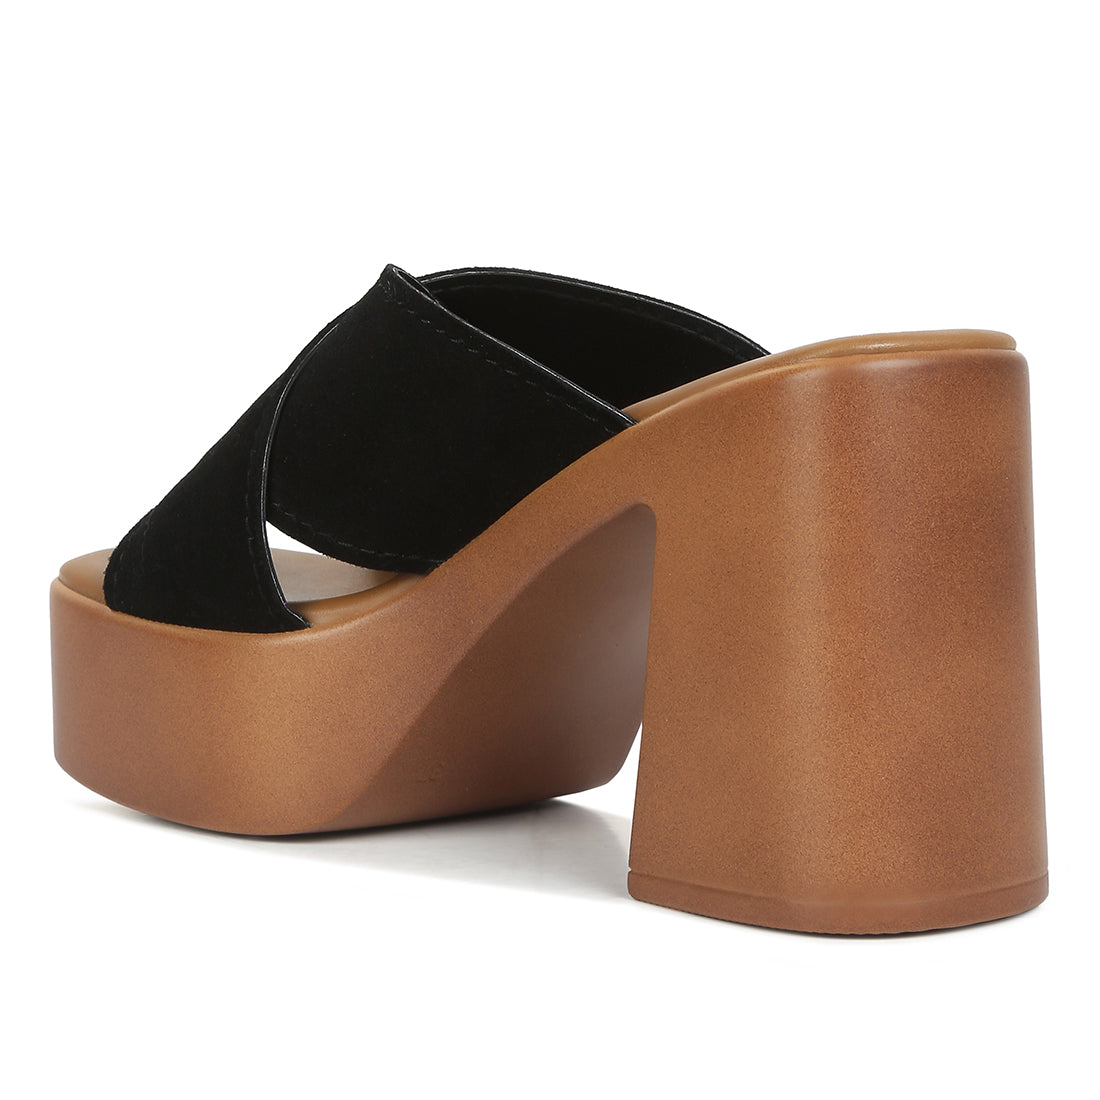 criss cross strap block heel sandals#color_black